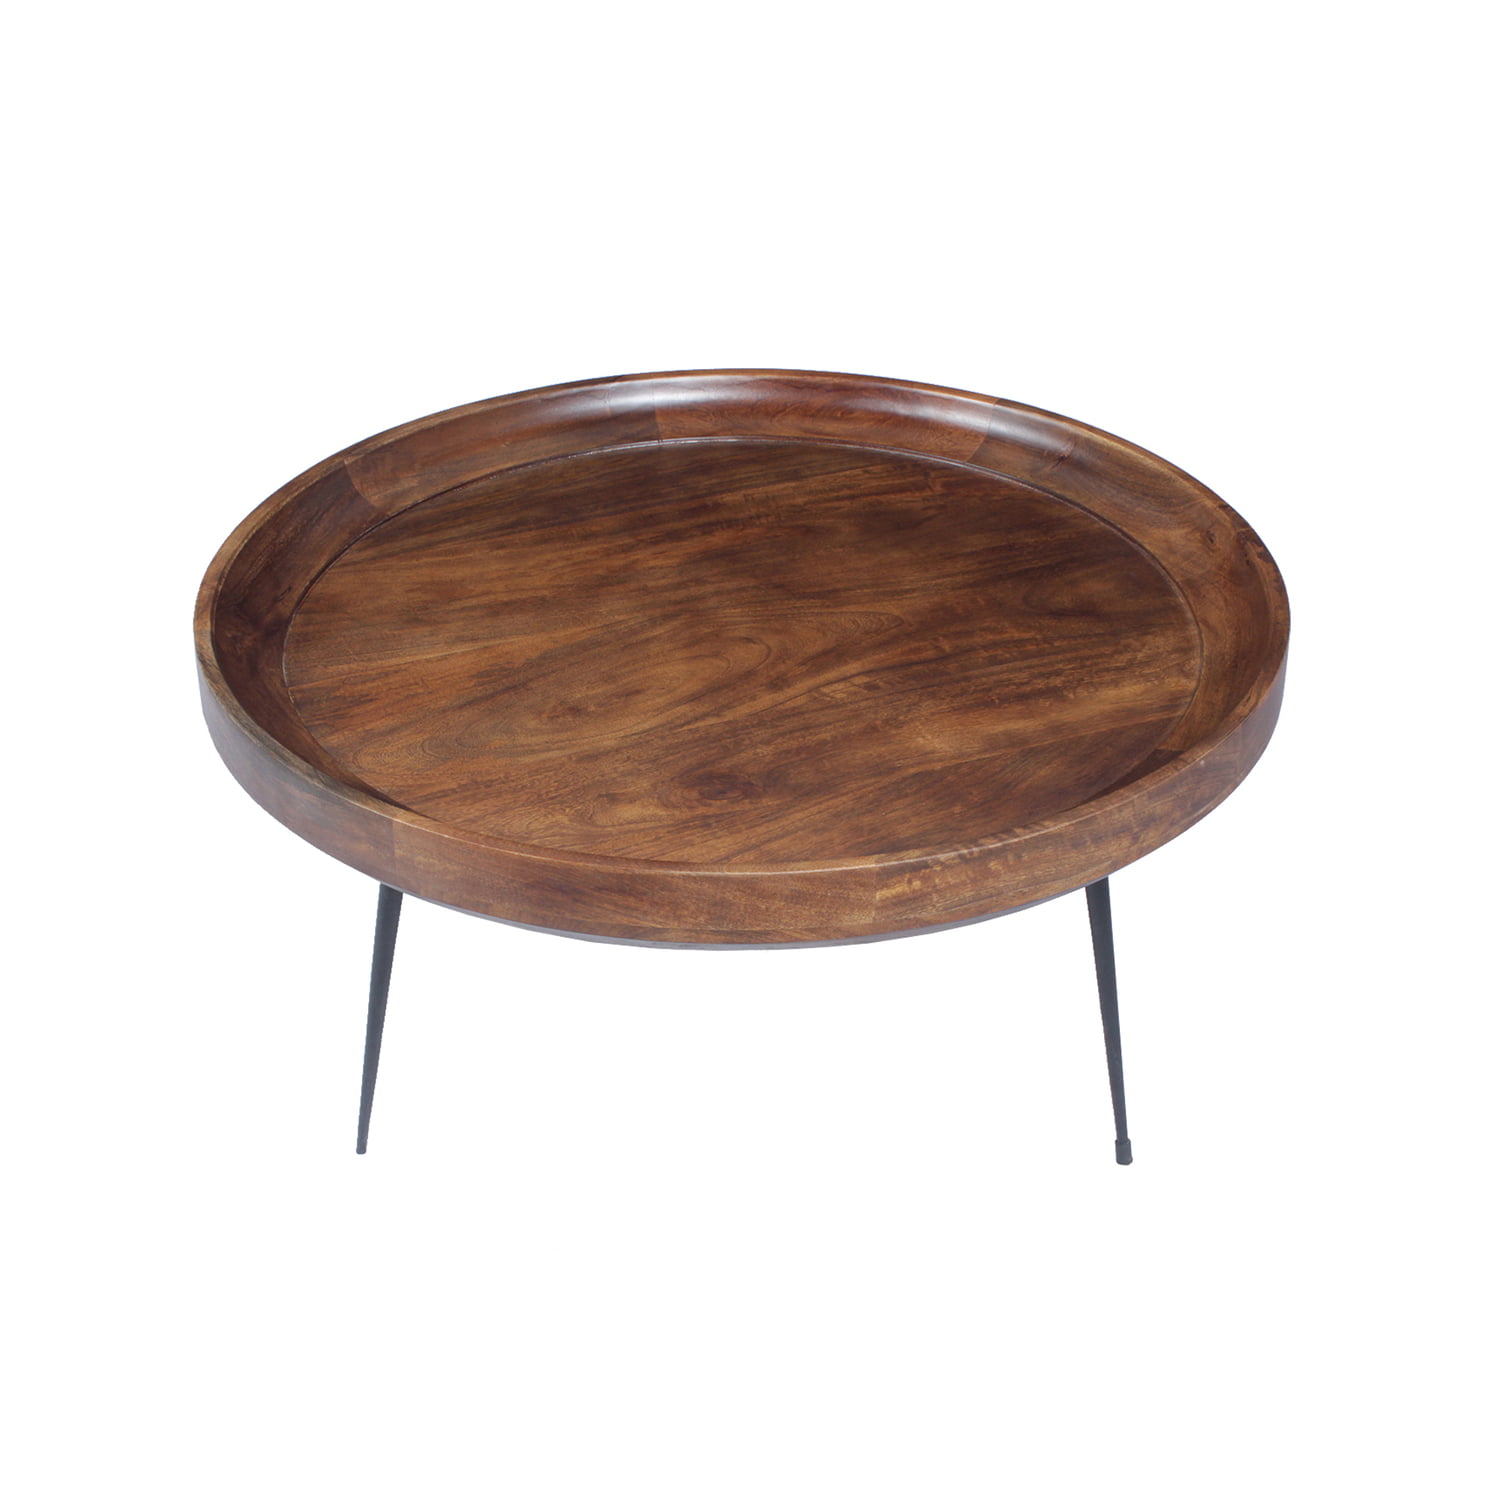 Benzara Round Mango Wood Coffee Table, Round Dark Wooden Coffee Table